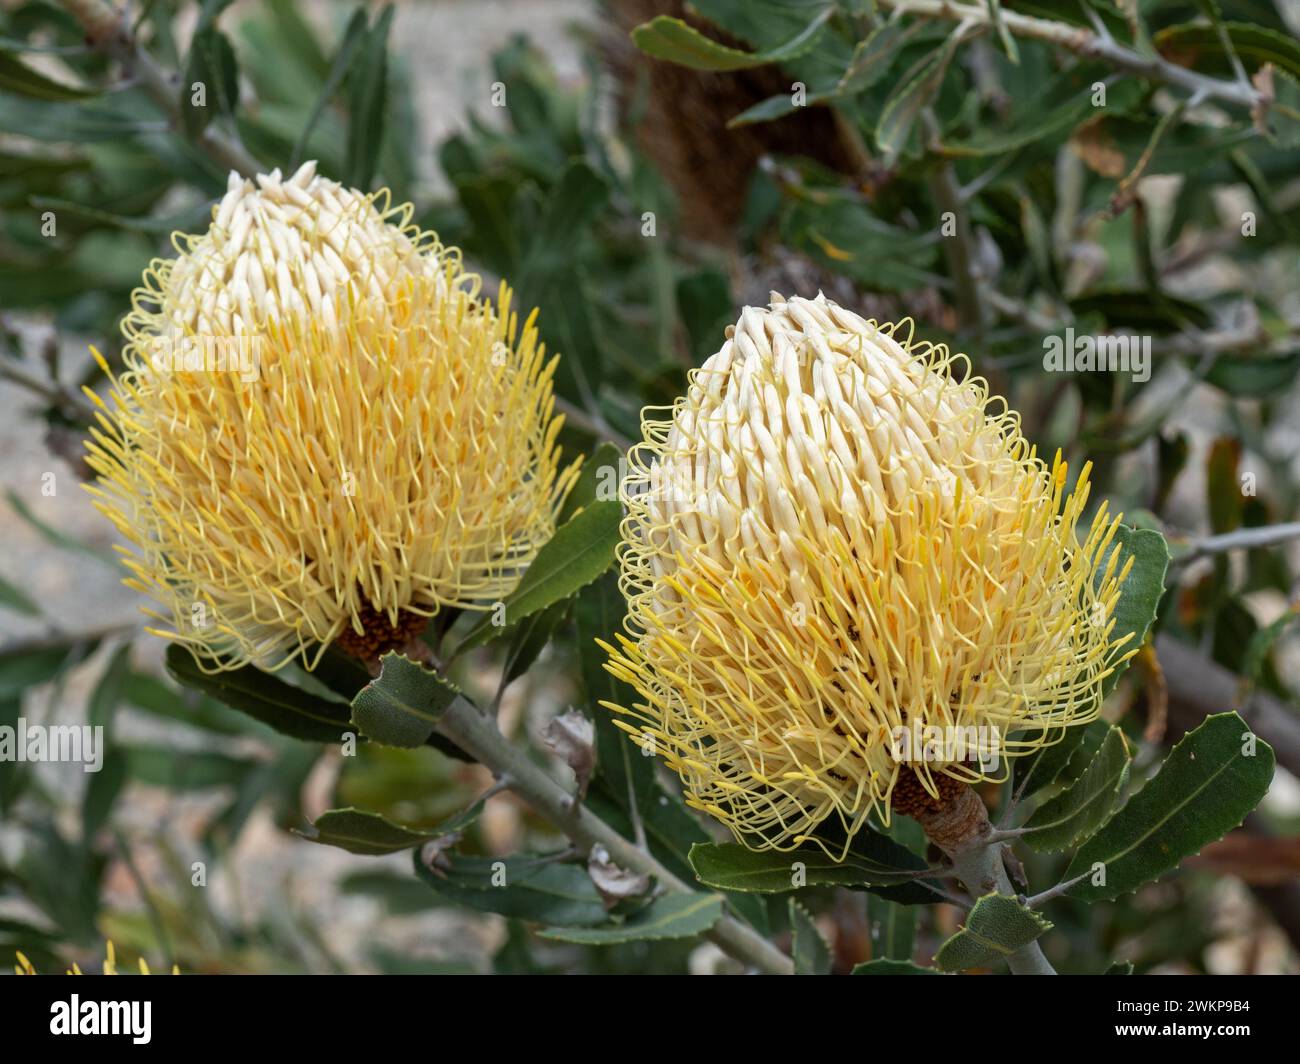 Two yellow Banksia flowers in bloom in summer, Australian garden Stock Photo